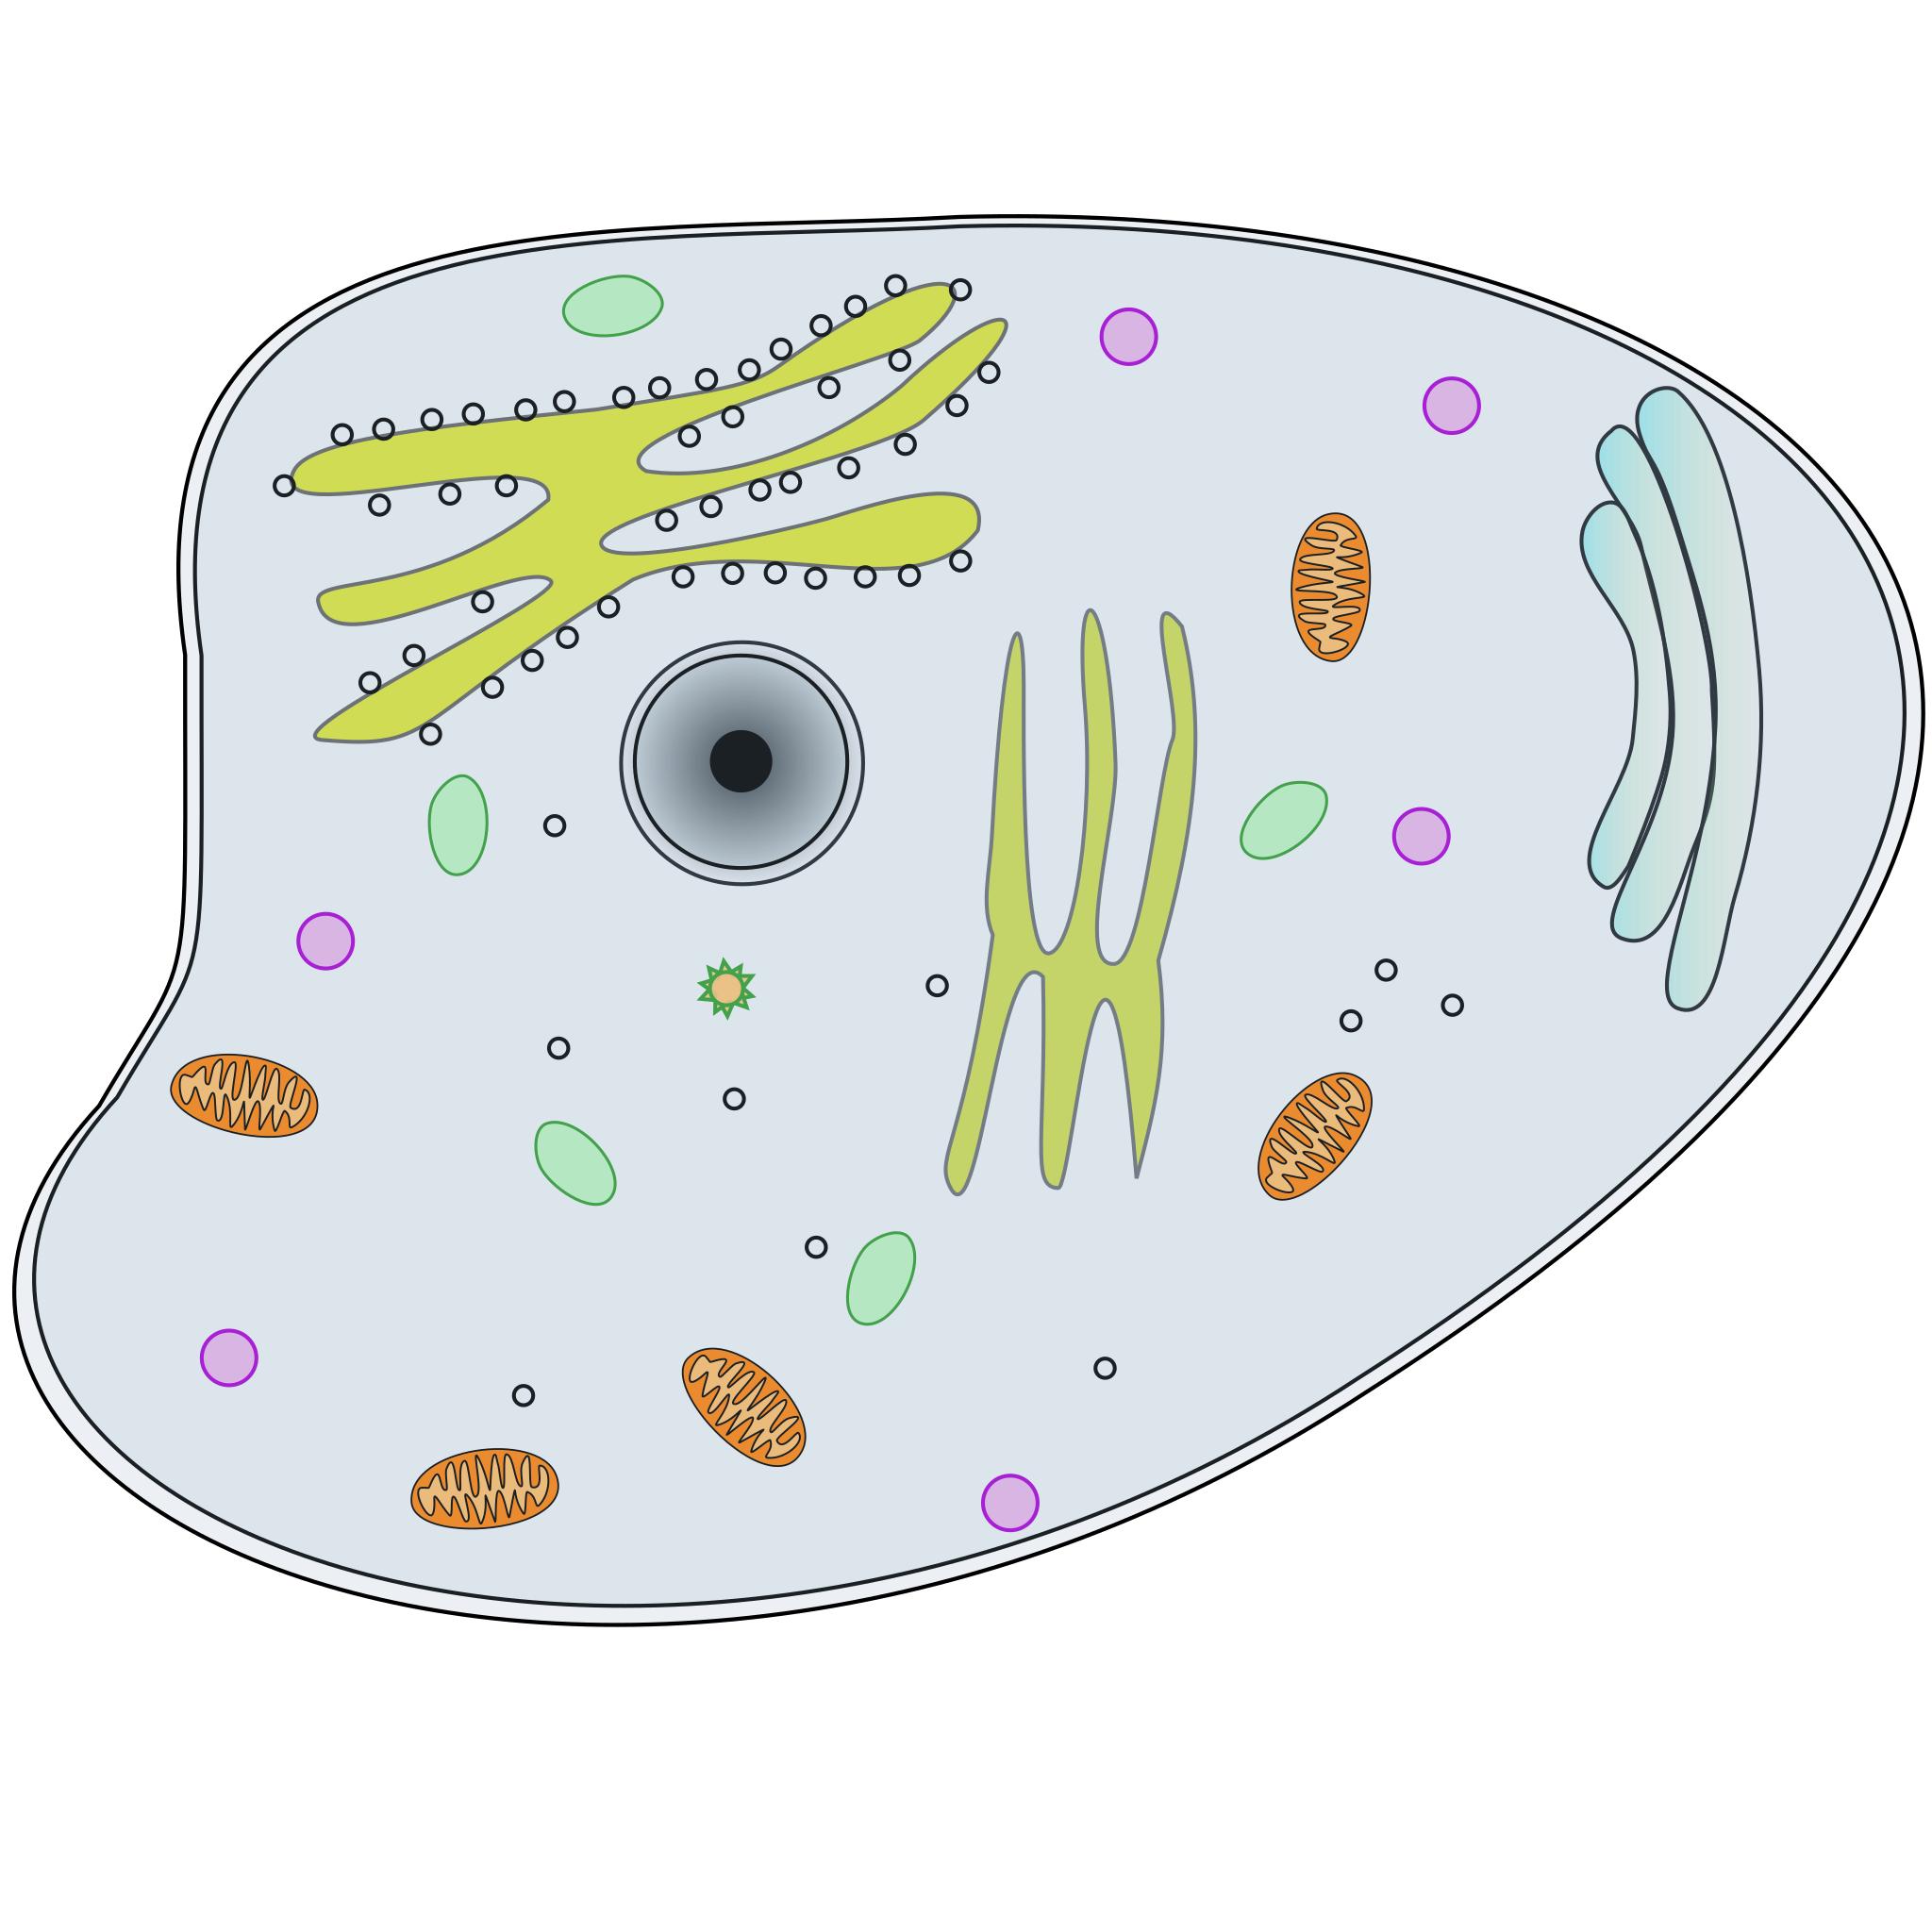 Цитоплазма эукариотической клетки рисунок